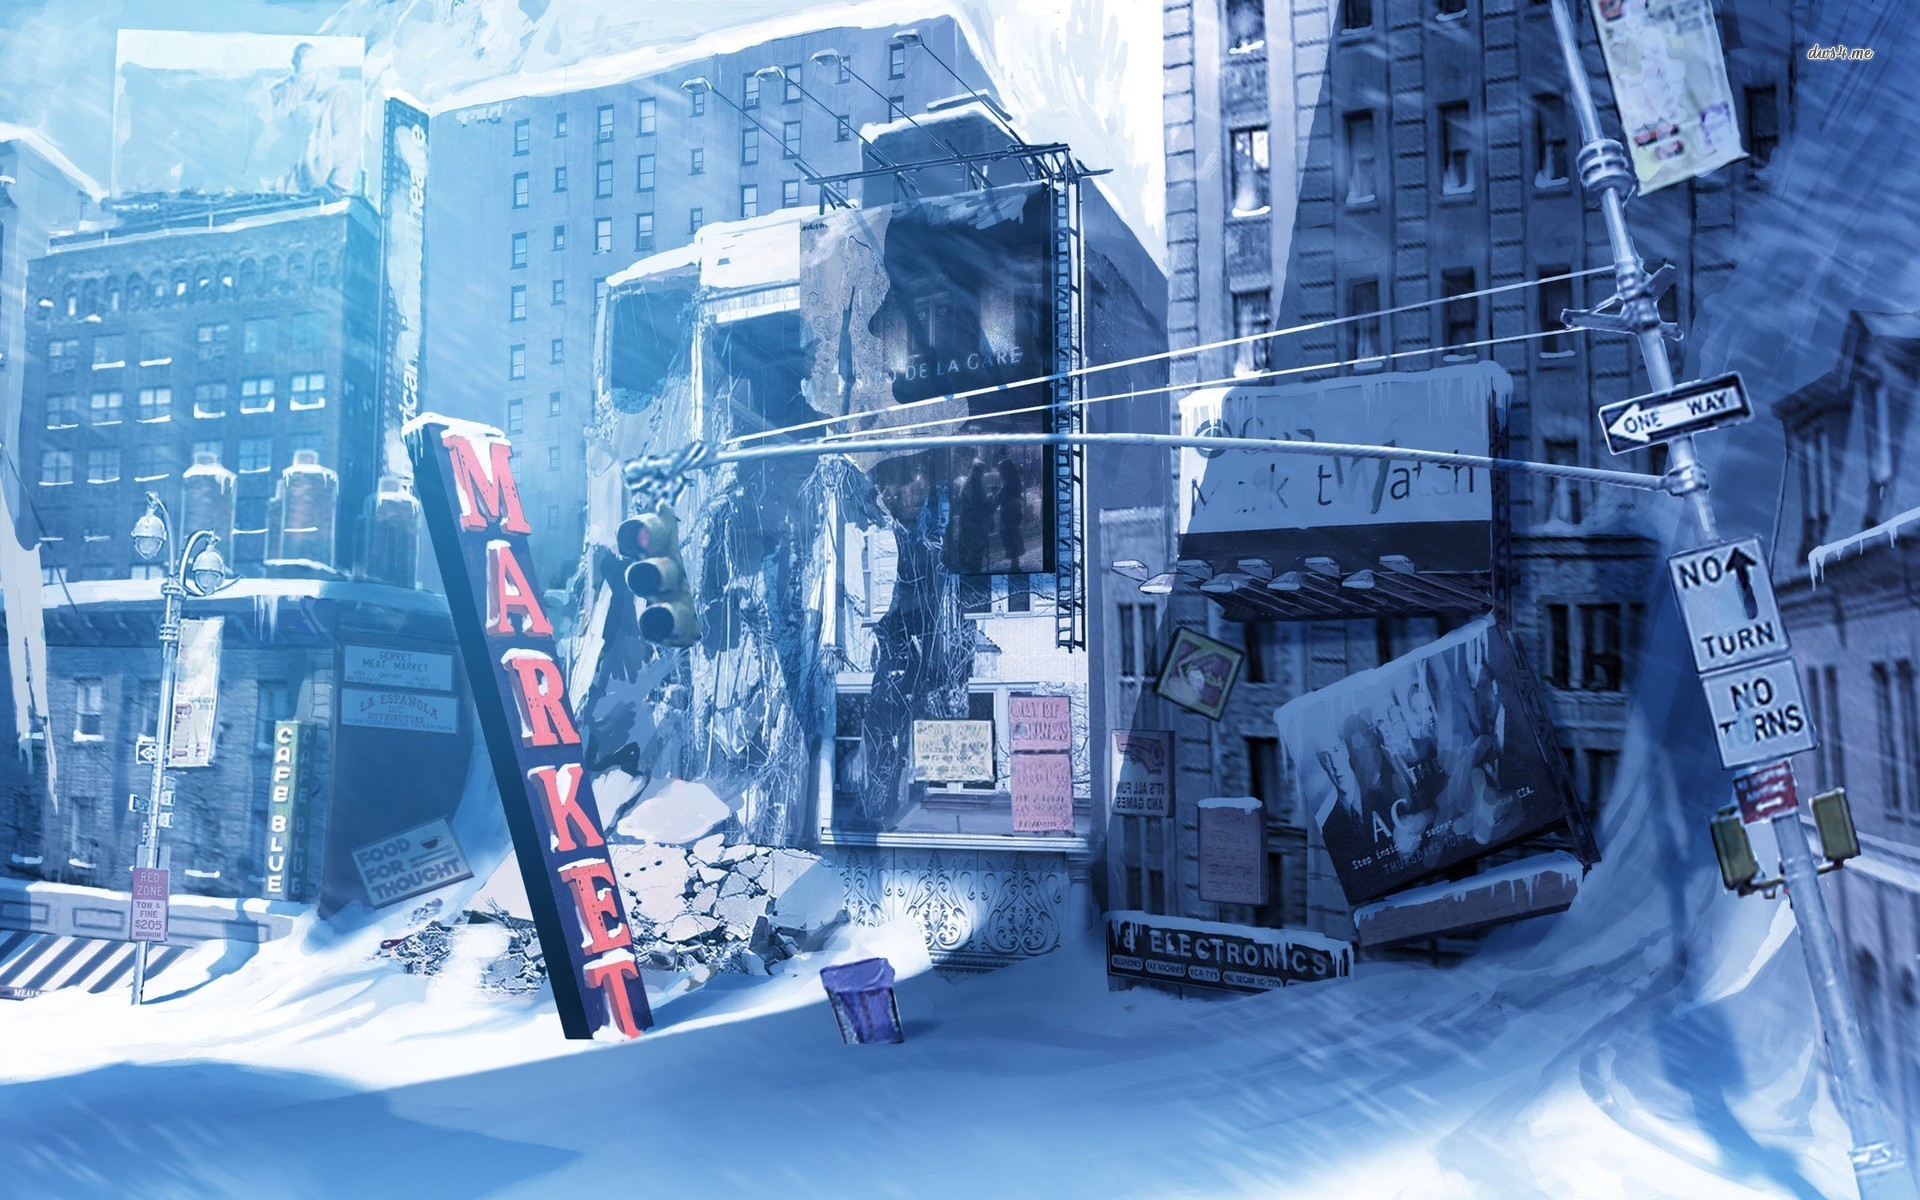 Winter City Digital Art Wallpapers